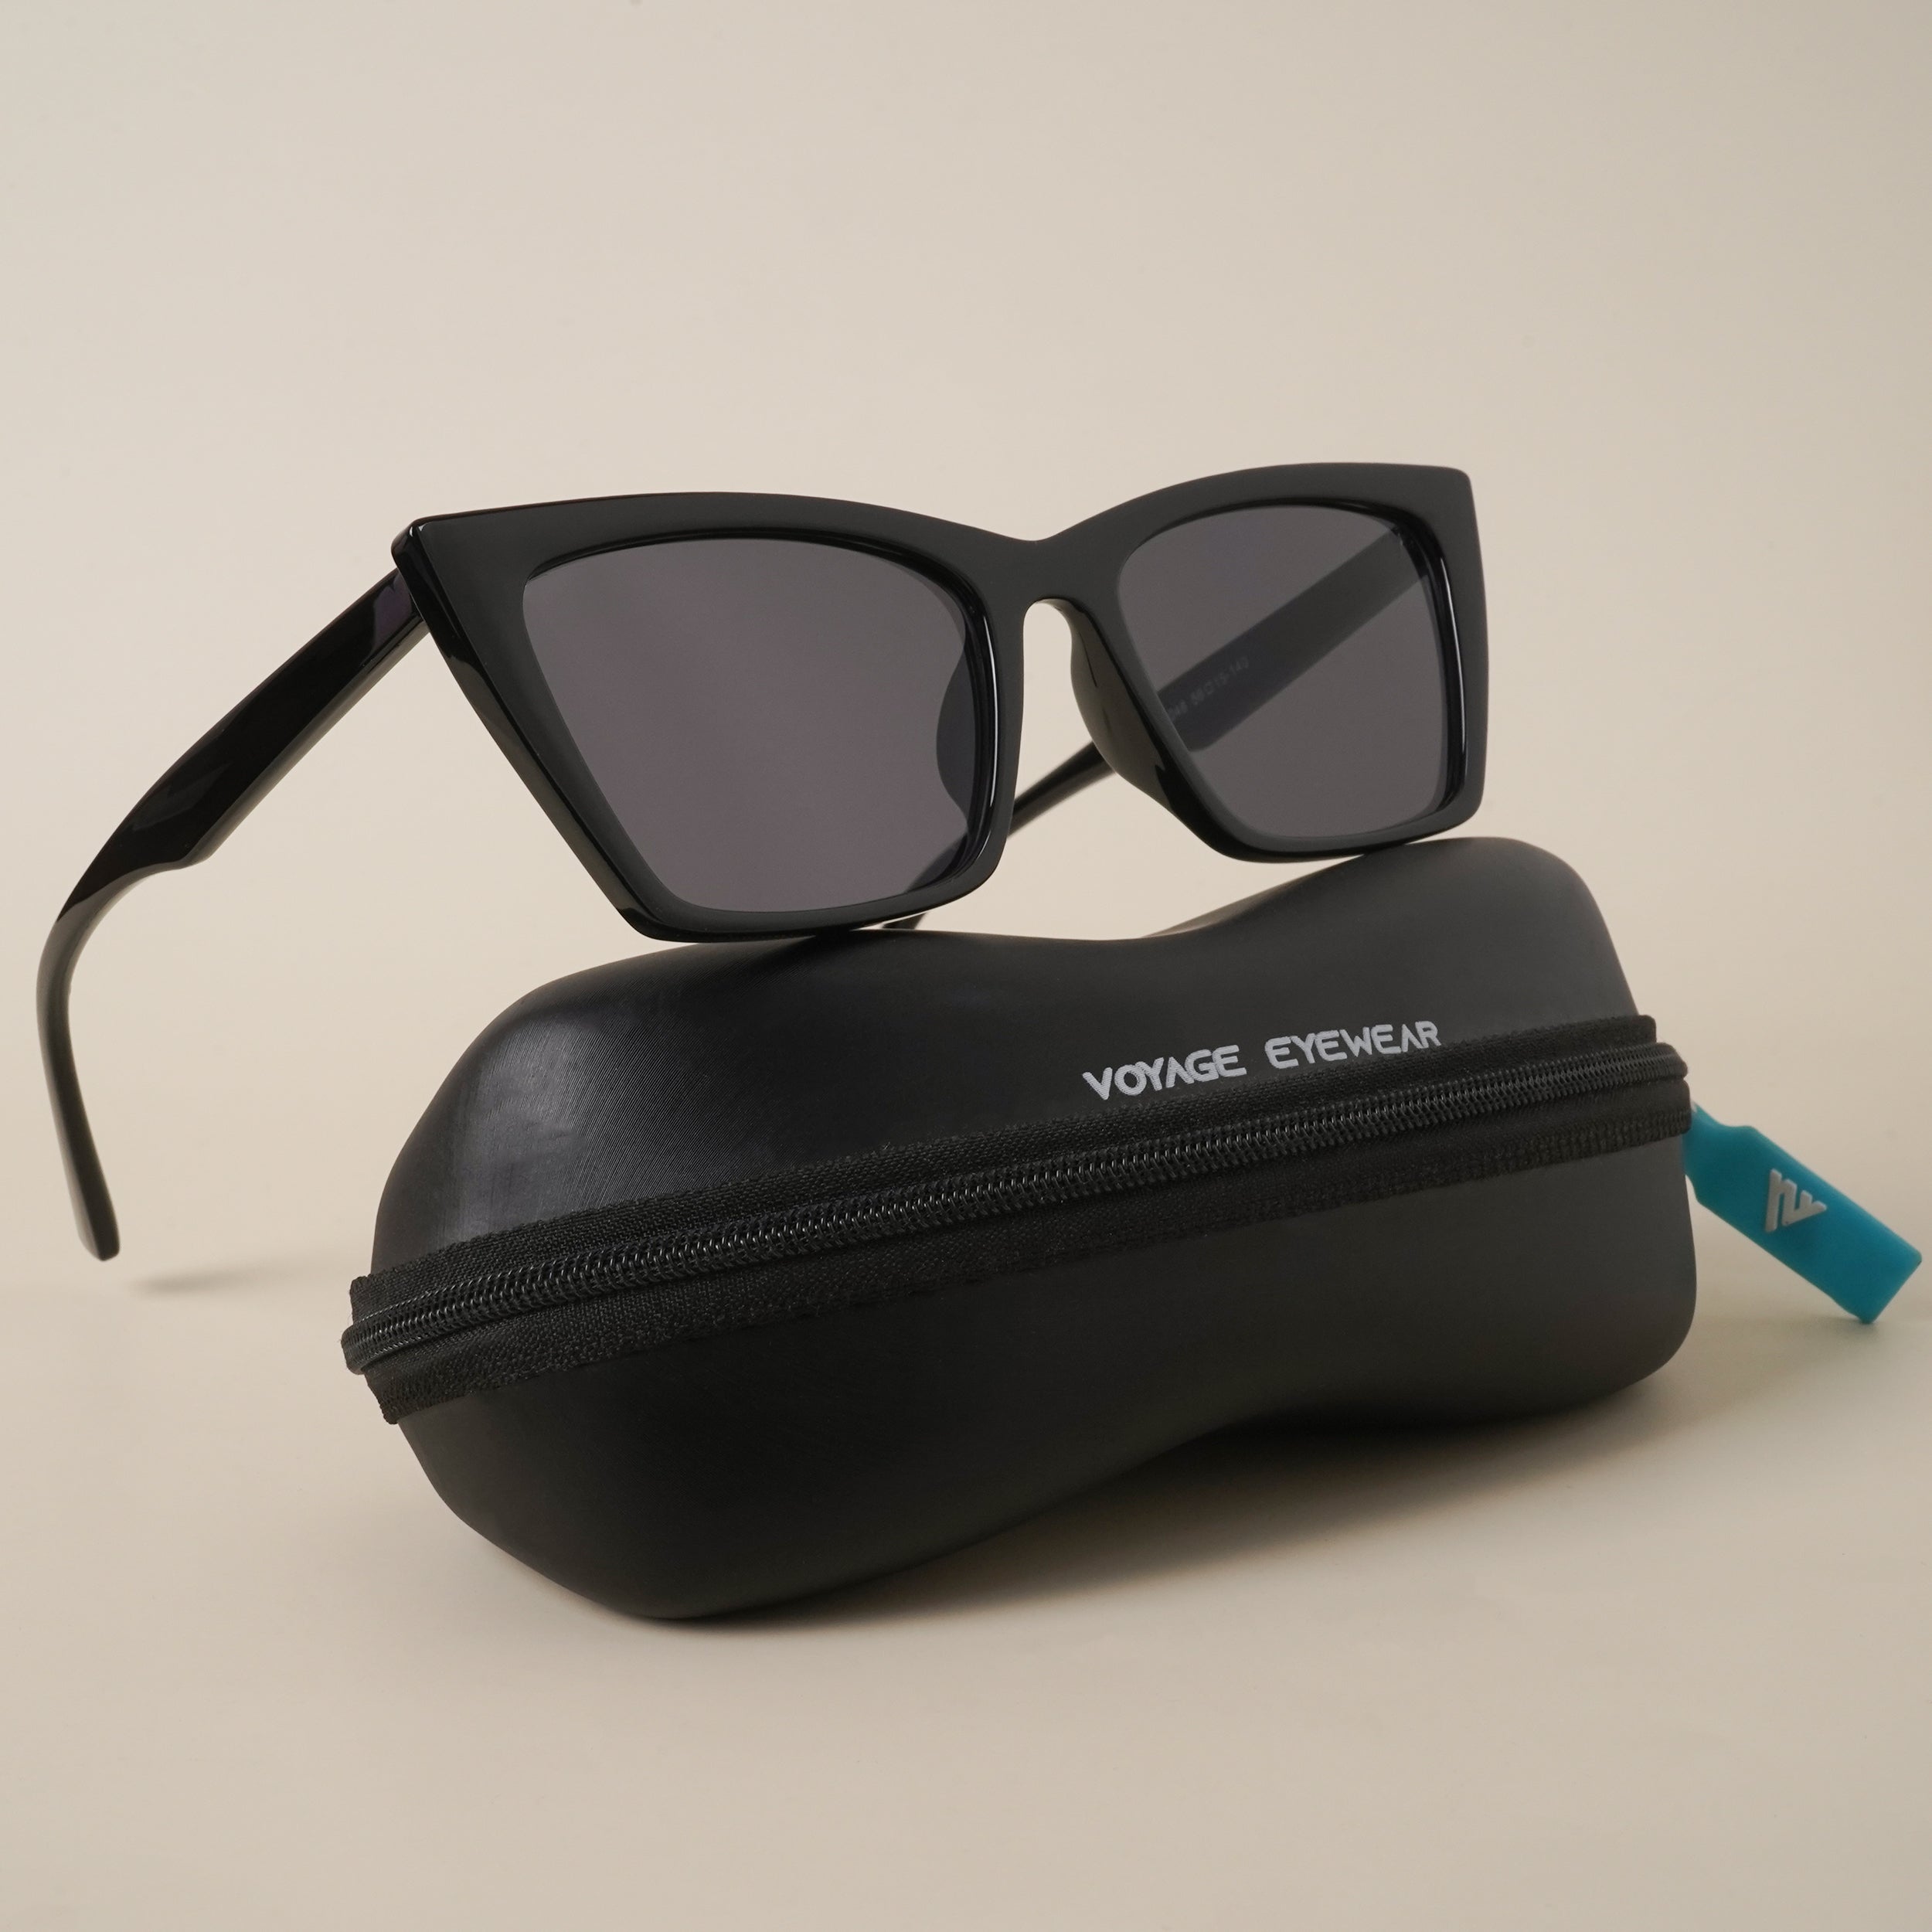 Voyage Black Cateye Sunglasses for Women (2048MG3990)